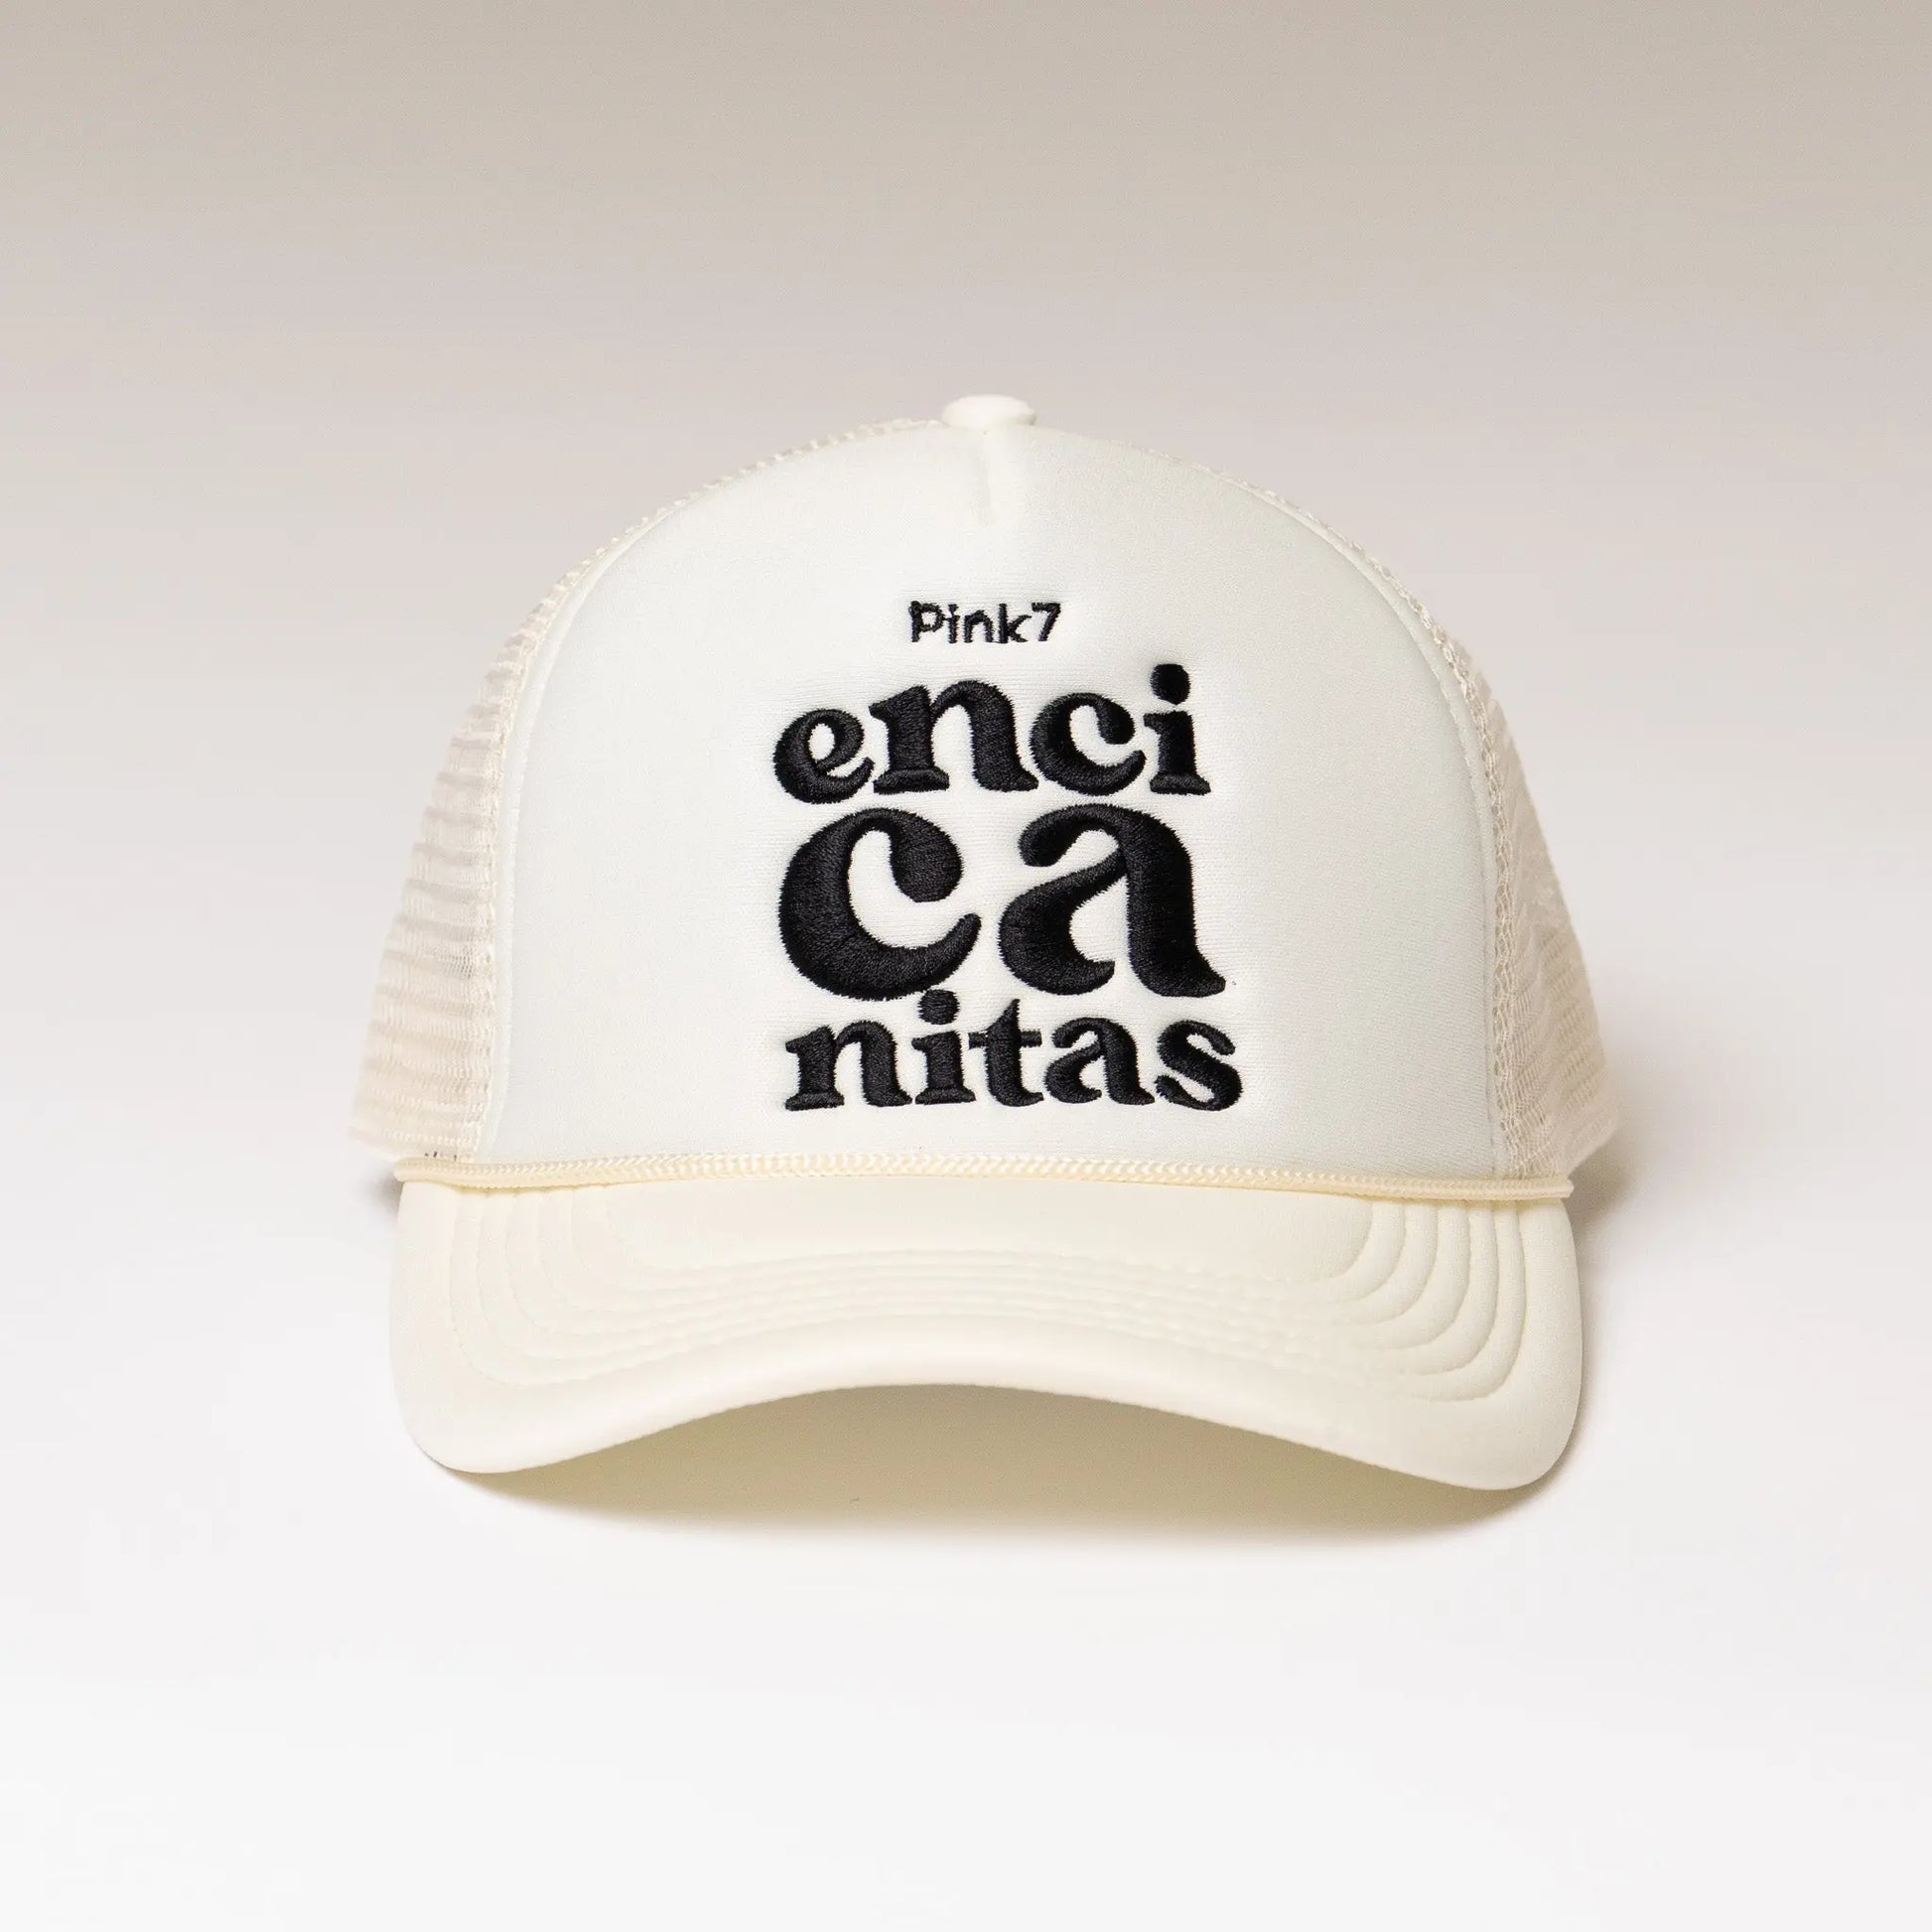 Vintage Encinitas Trucker Hat - White - Pink7, Inc.